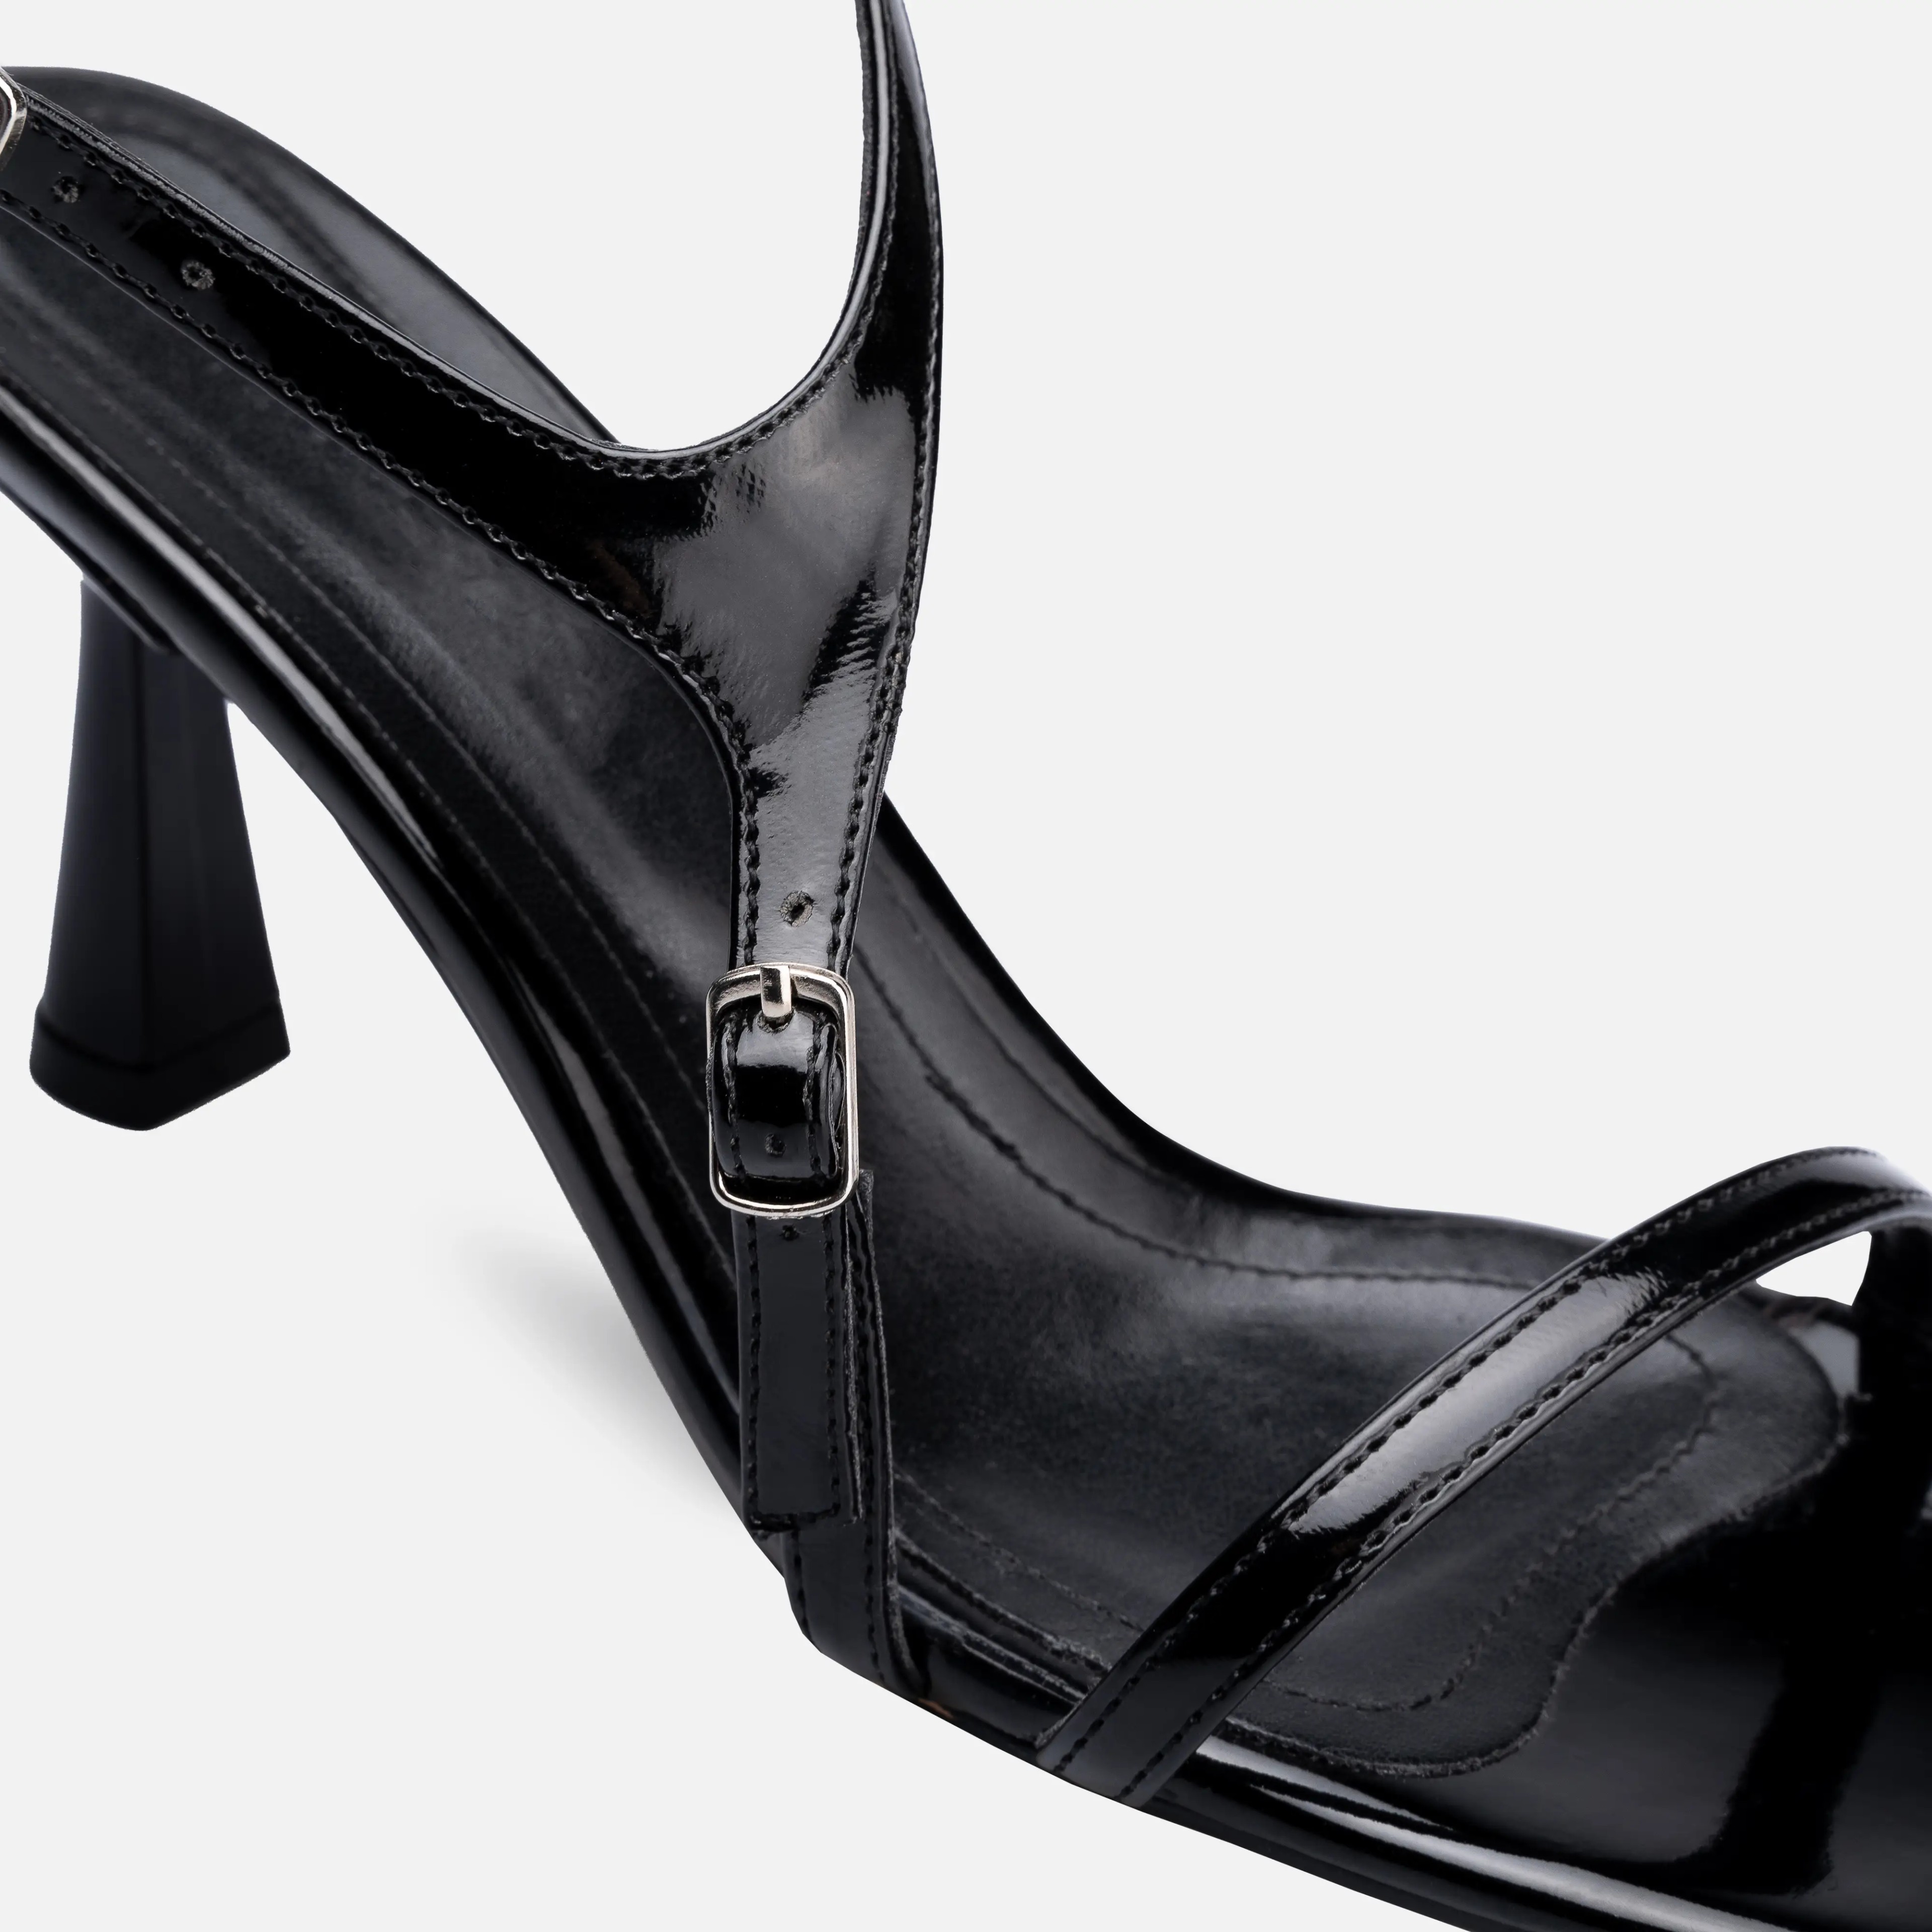 Rugan İnce Yüksek Topuklu Ayakkabı - Siyah